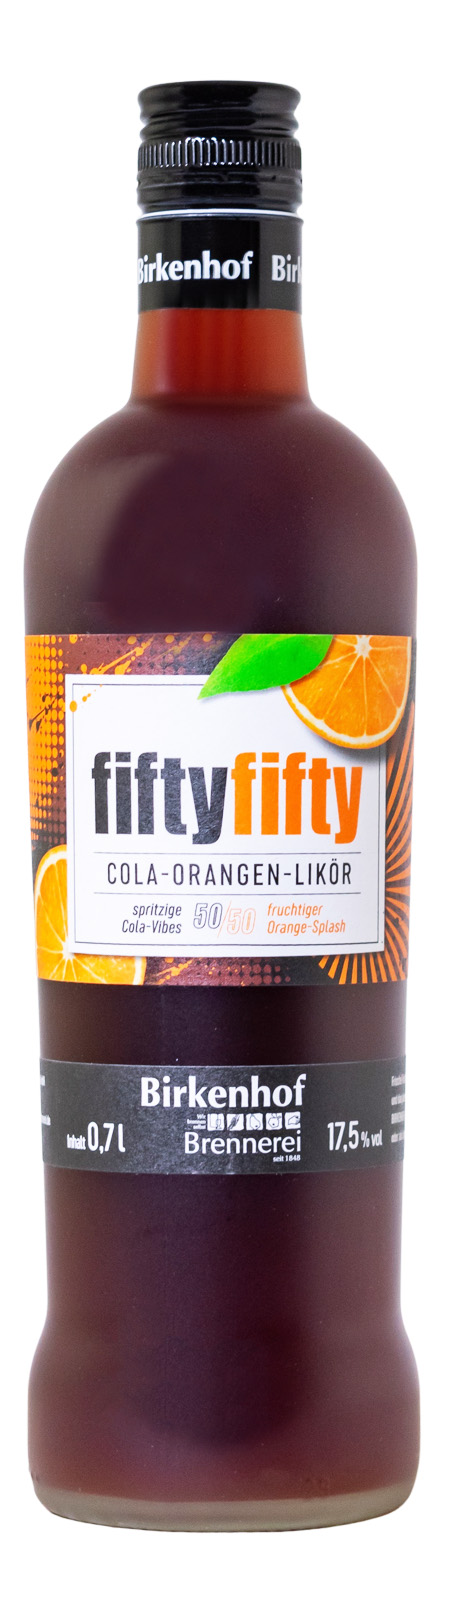 Birkenhof Fifty Five Cola Orangen Likör - 0,7L 17,5% vol